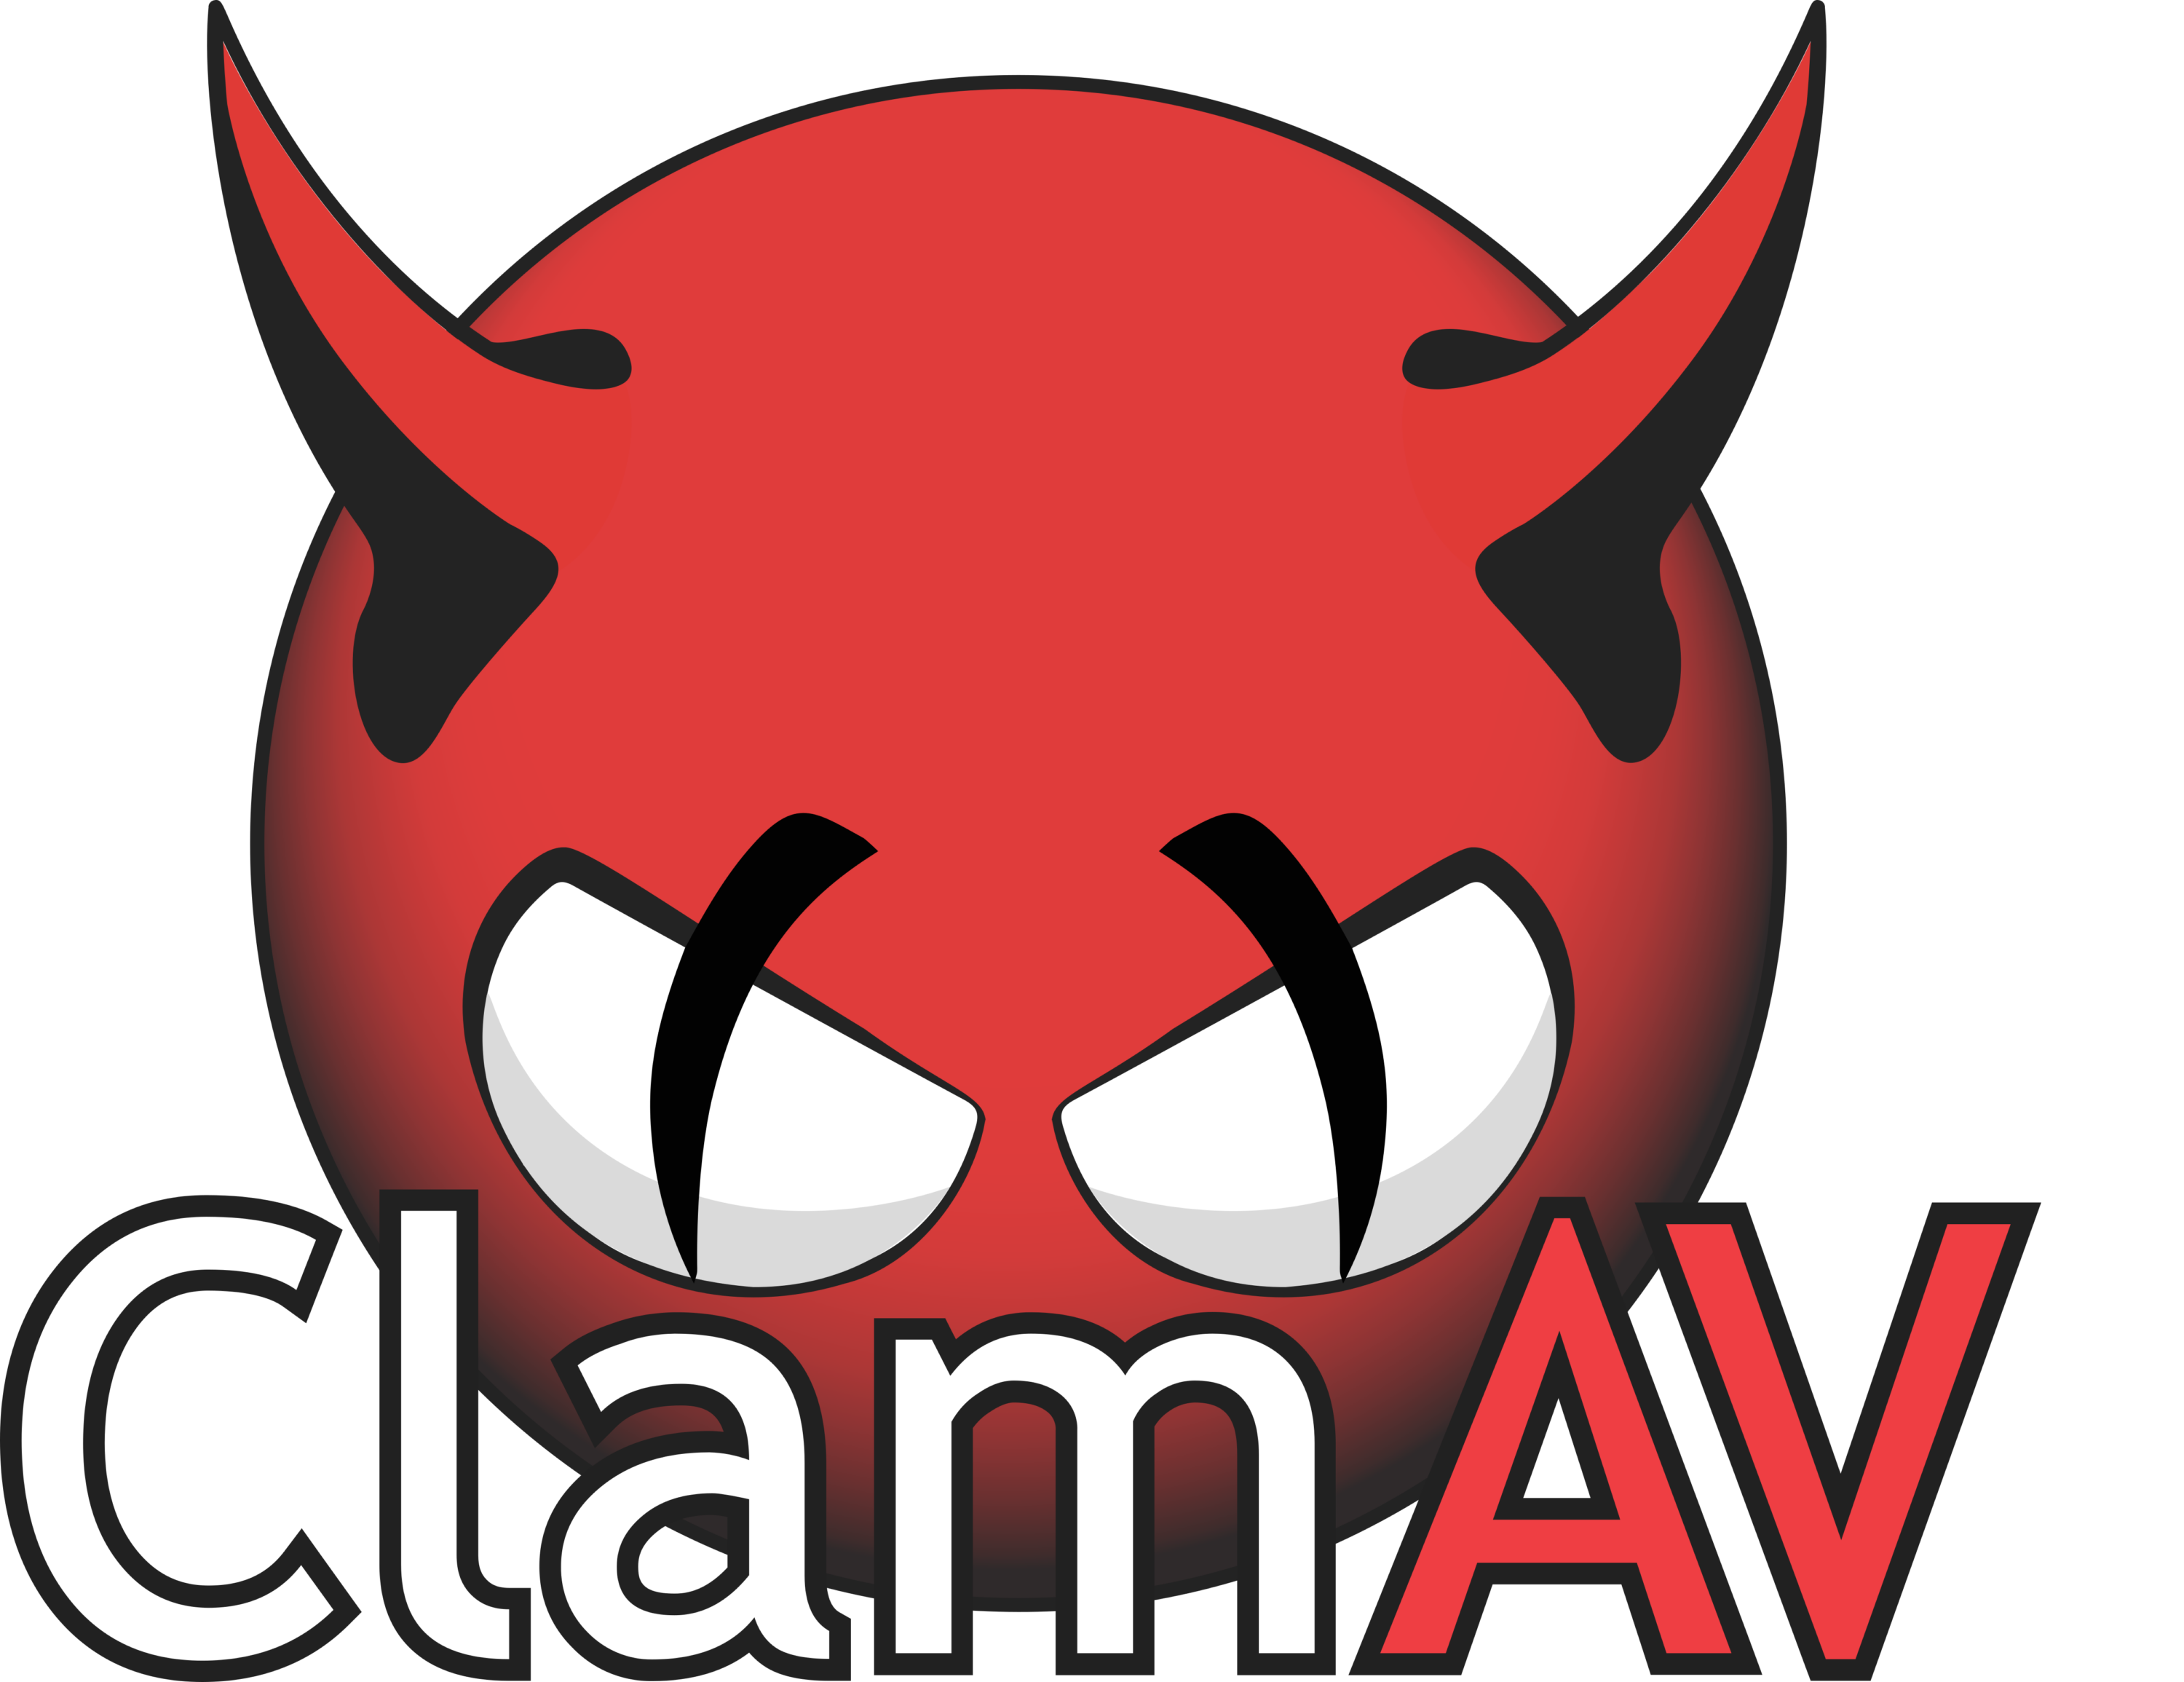 ClamAV Logo